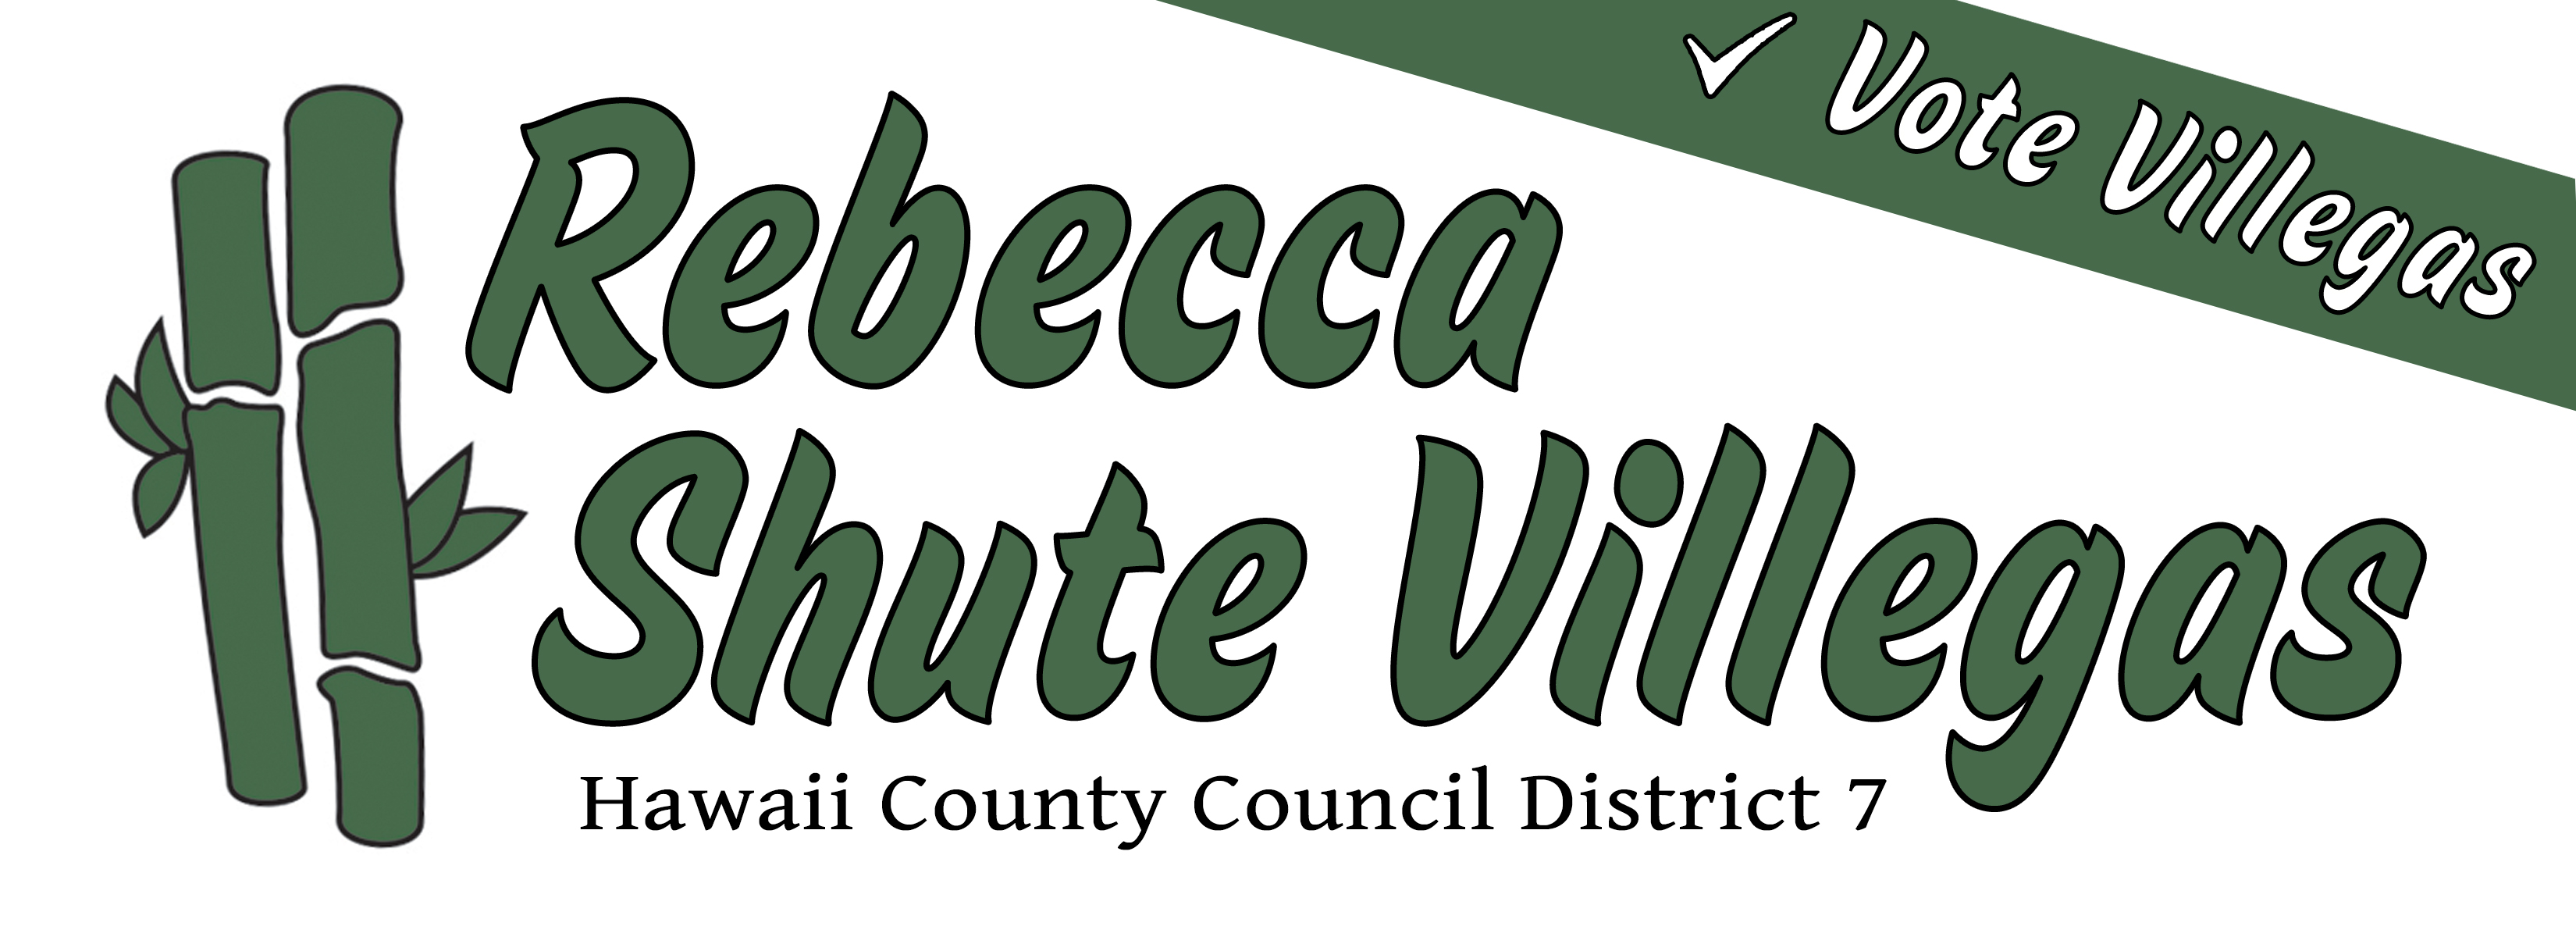 Rebecca Shute Villegas for Hawaii County Council District 7 logo